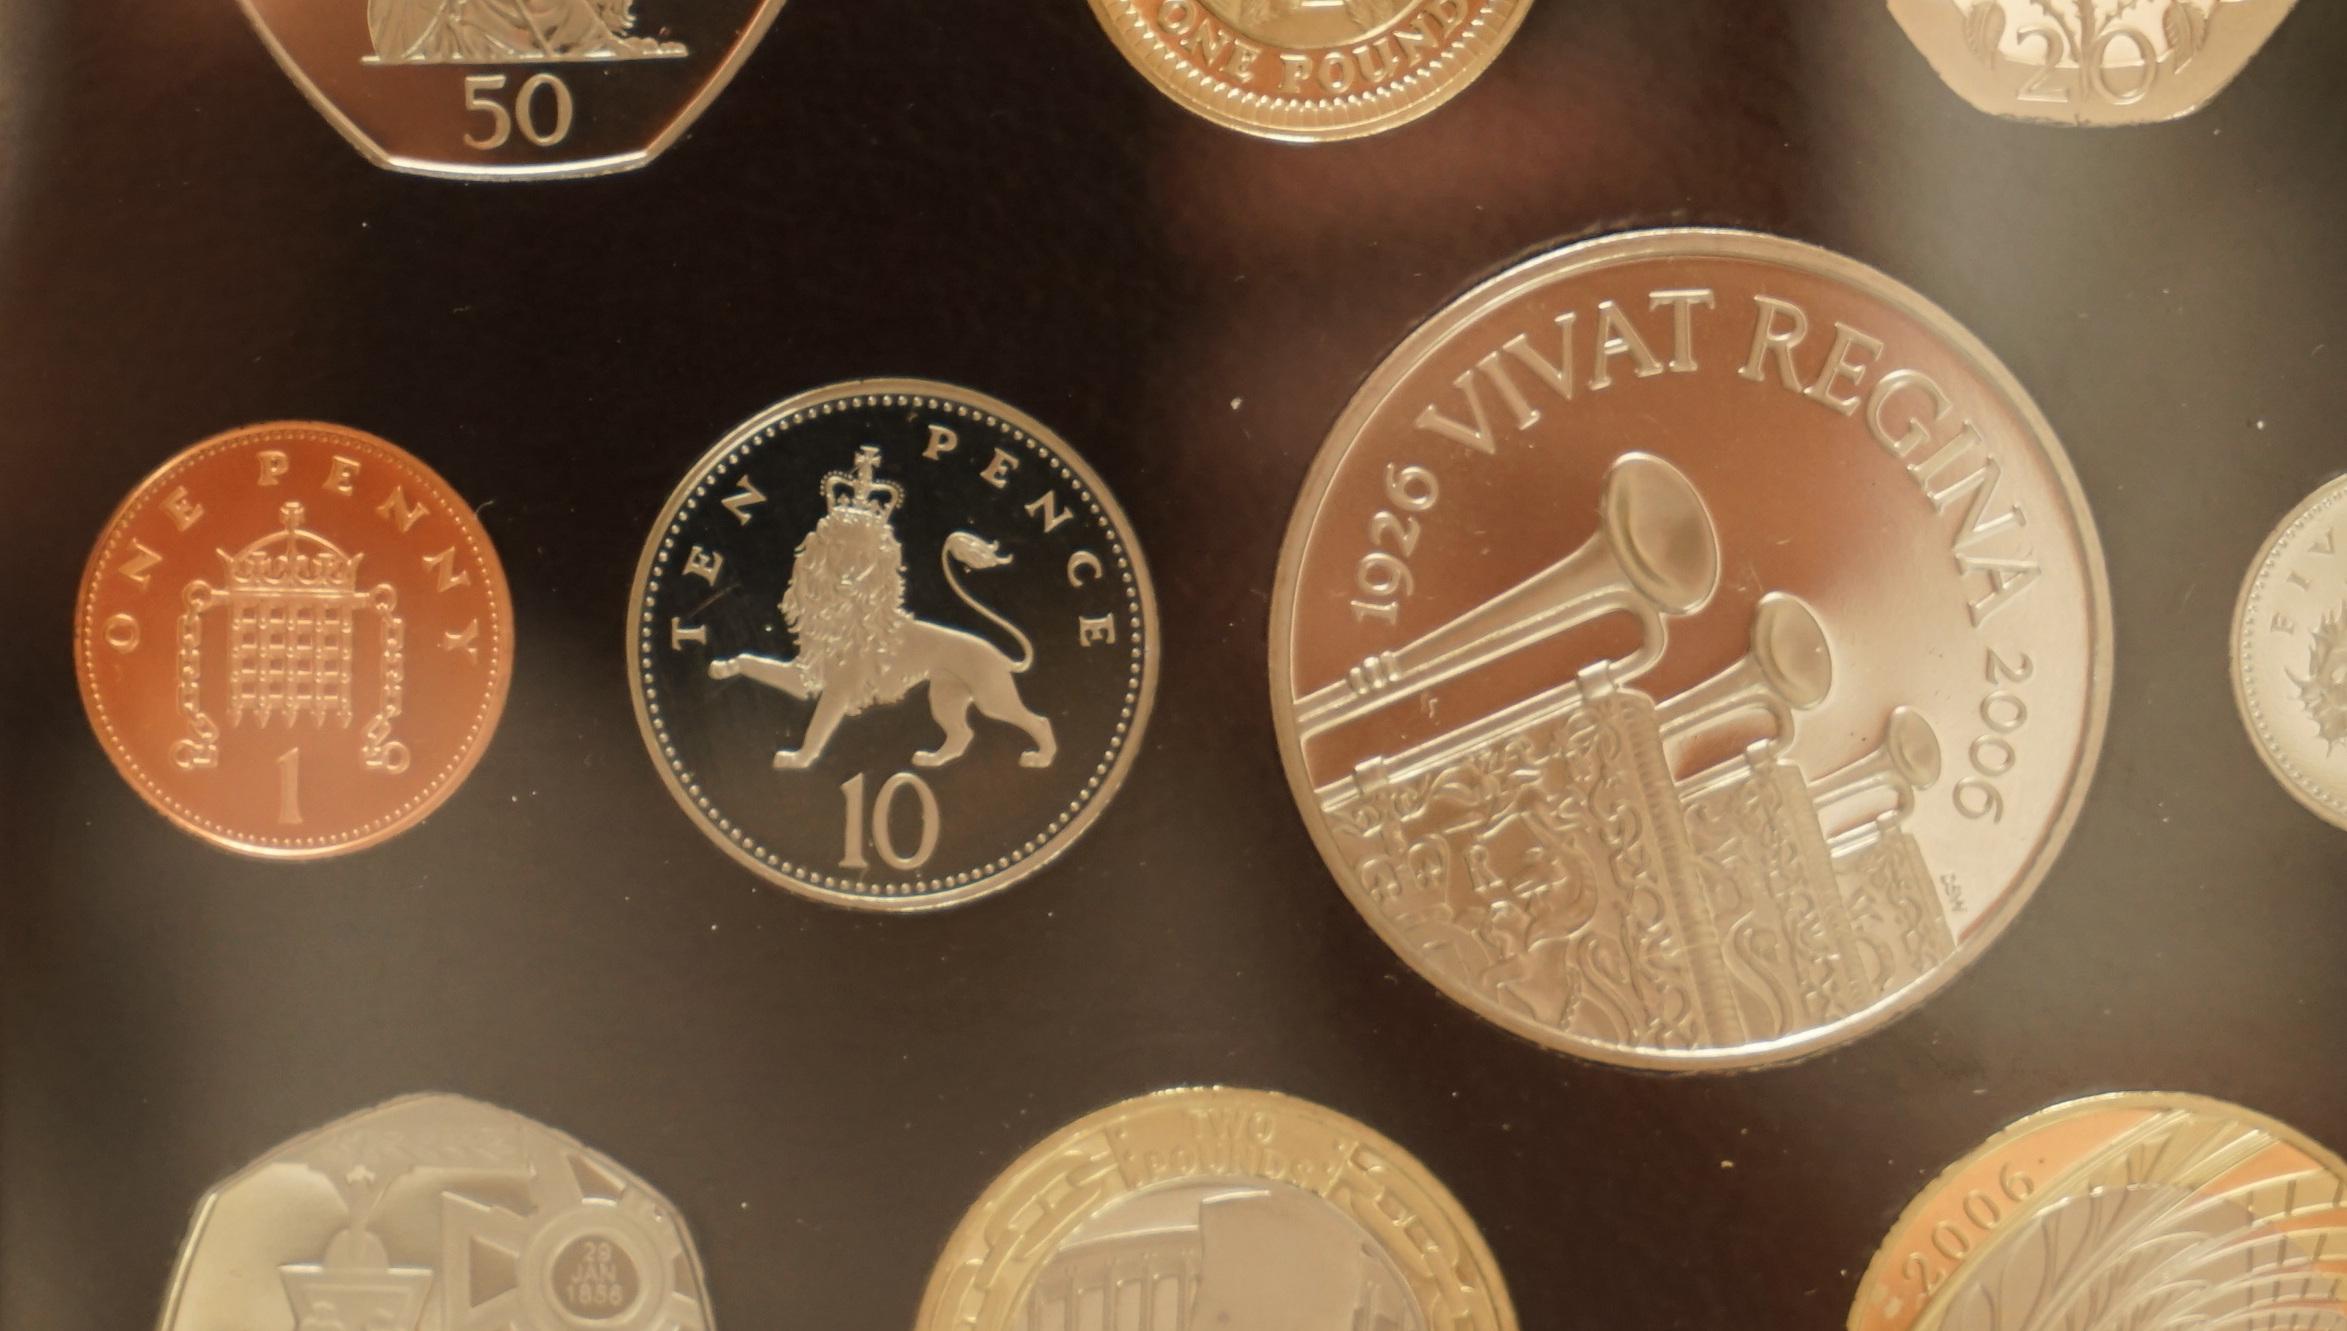 13 Coin Royal Mint 1926, 2006 Queen Elizabeth Proof Set with £5 Vivat Regina 6